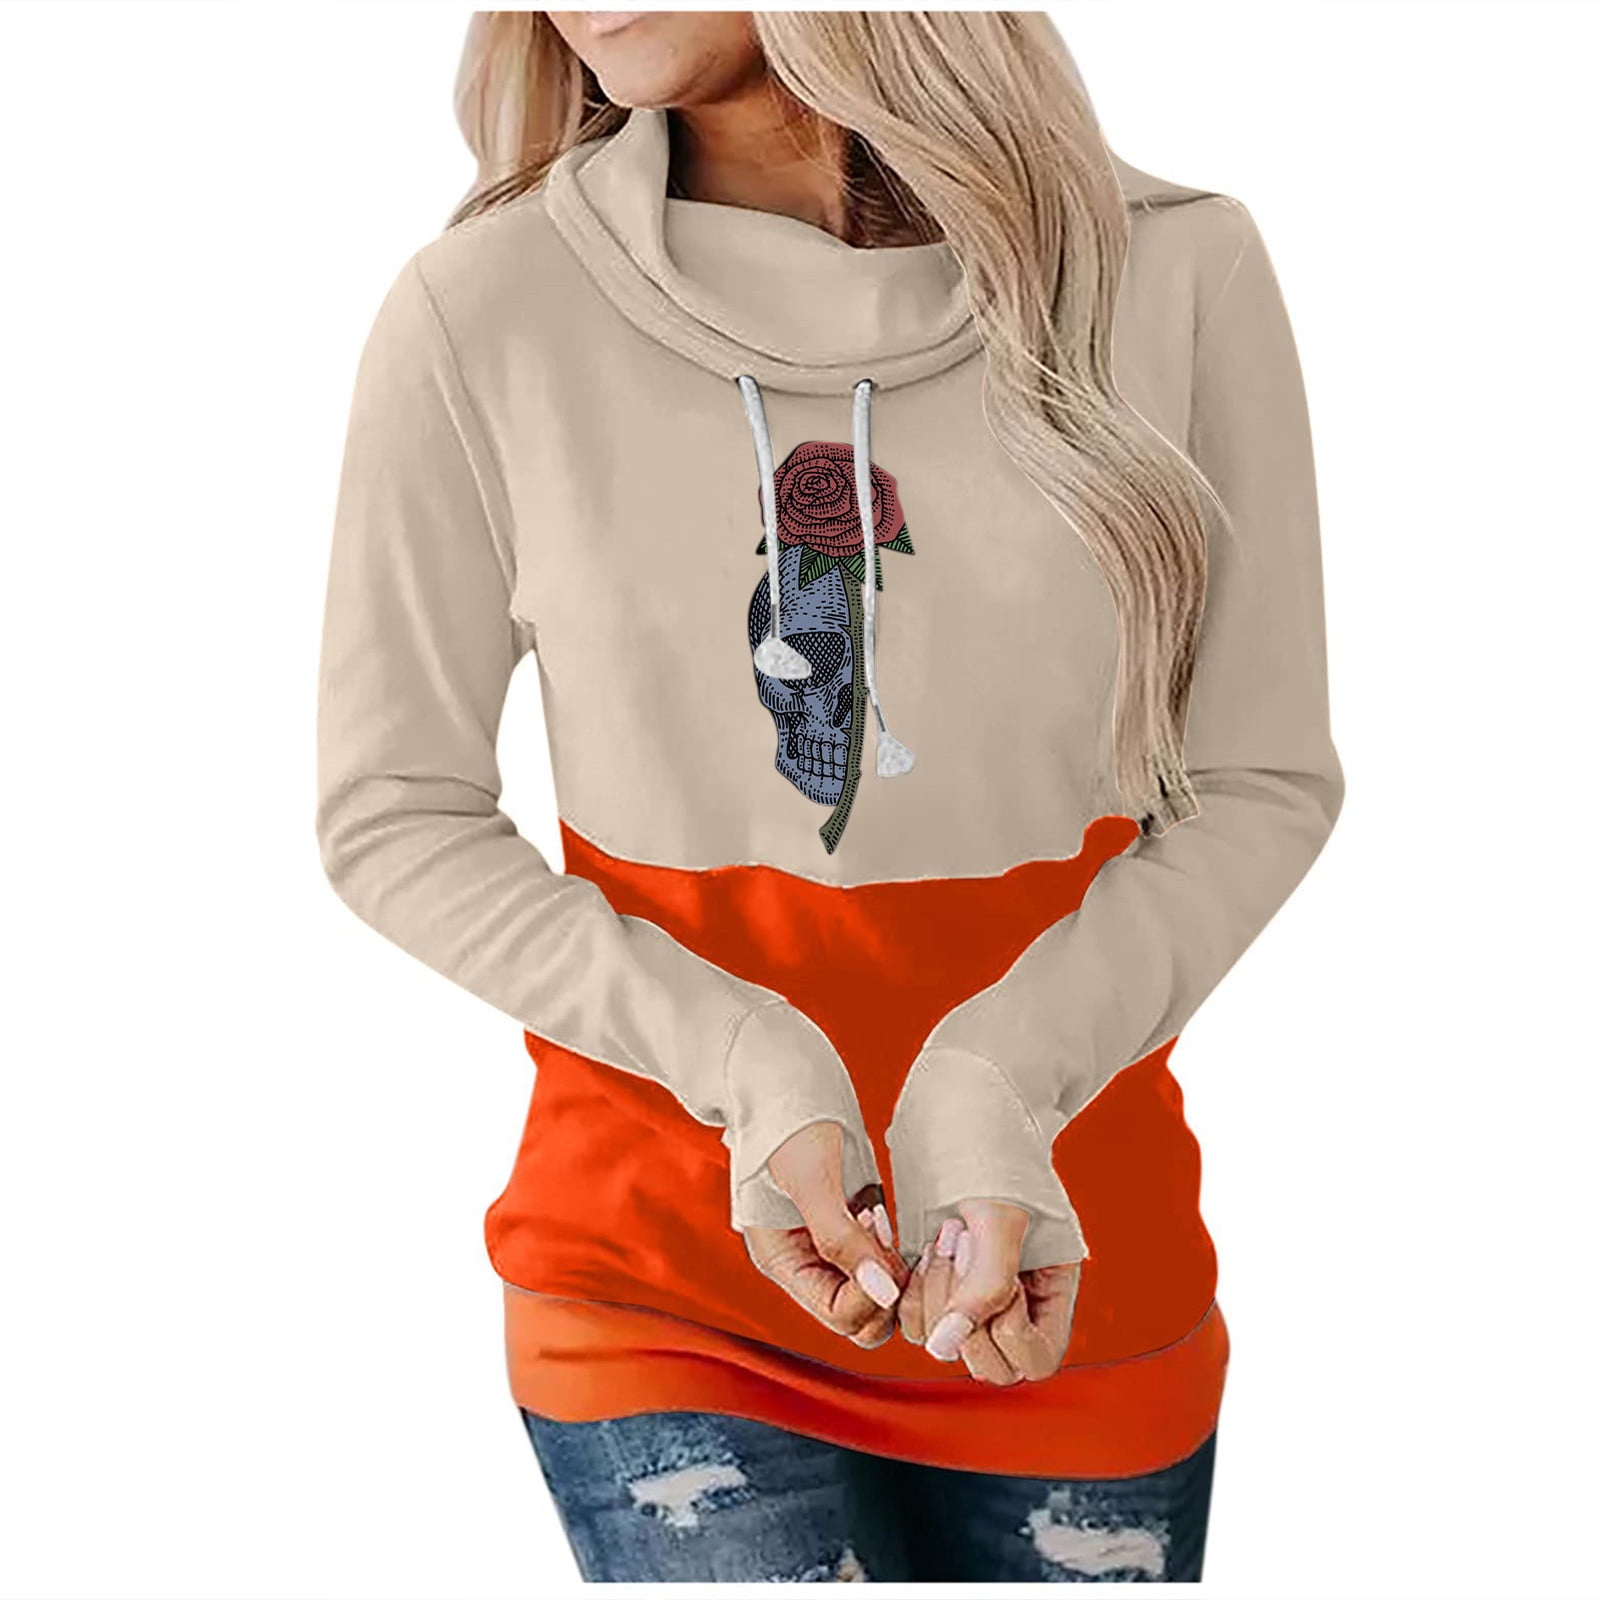 Meikosks Womens Casual Long Sleeve Sweatshirt Cute Graphic Print Hoodies Jumper Pullover Tops 